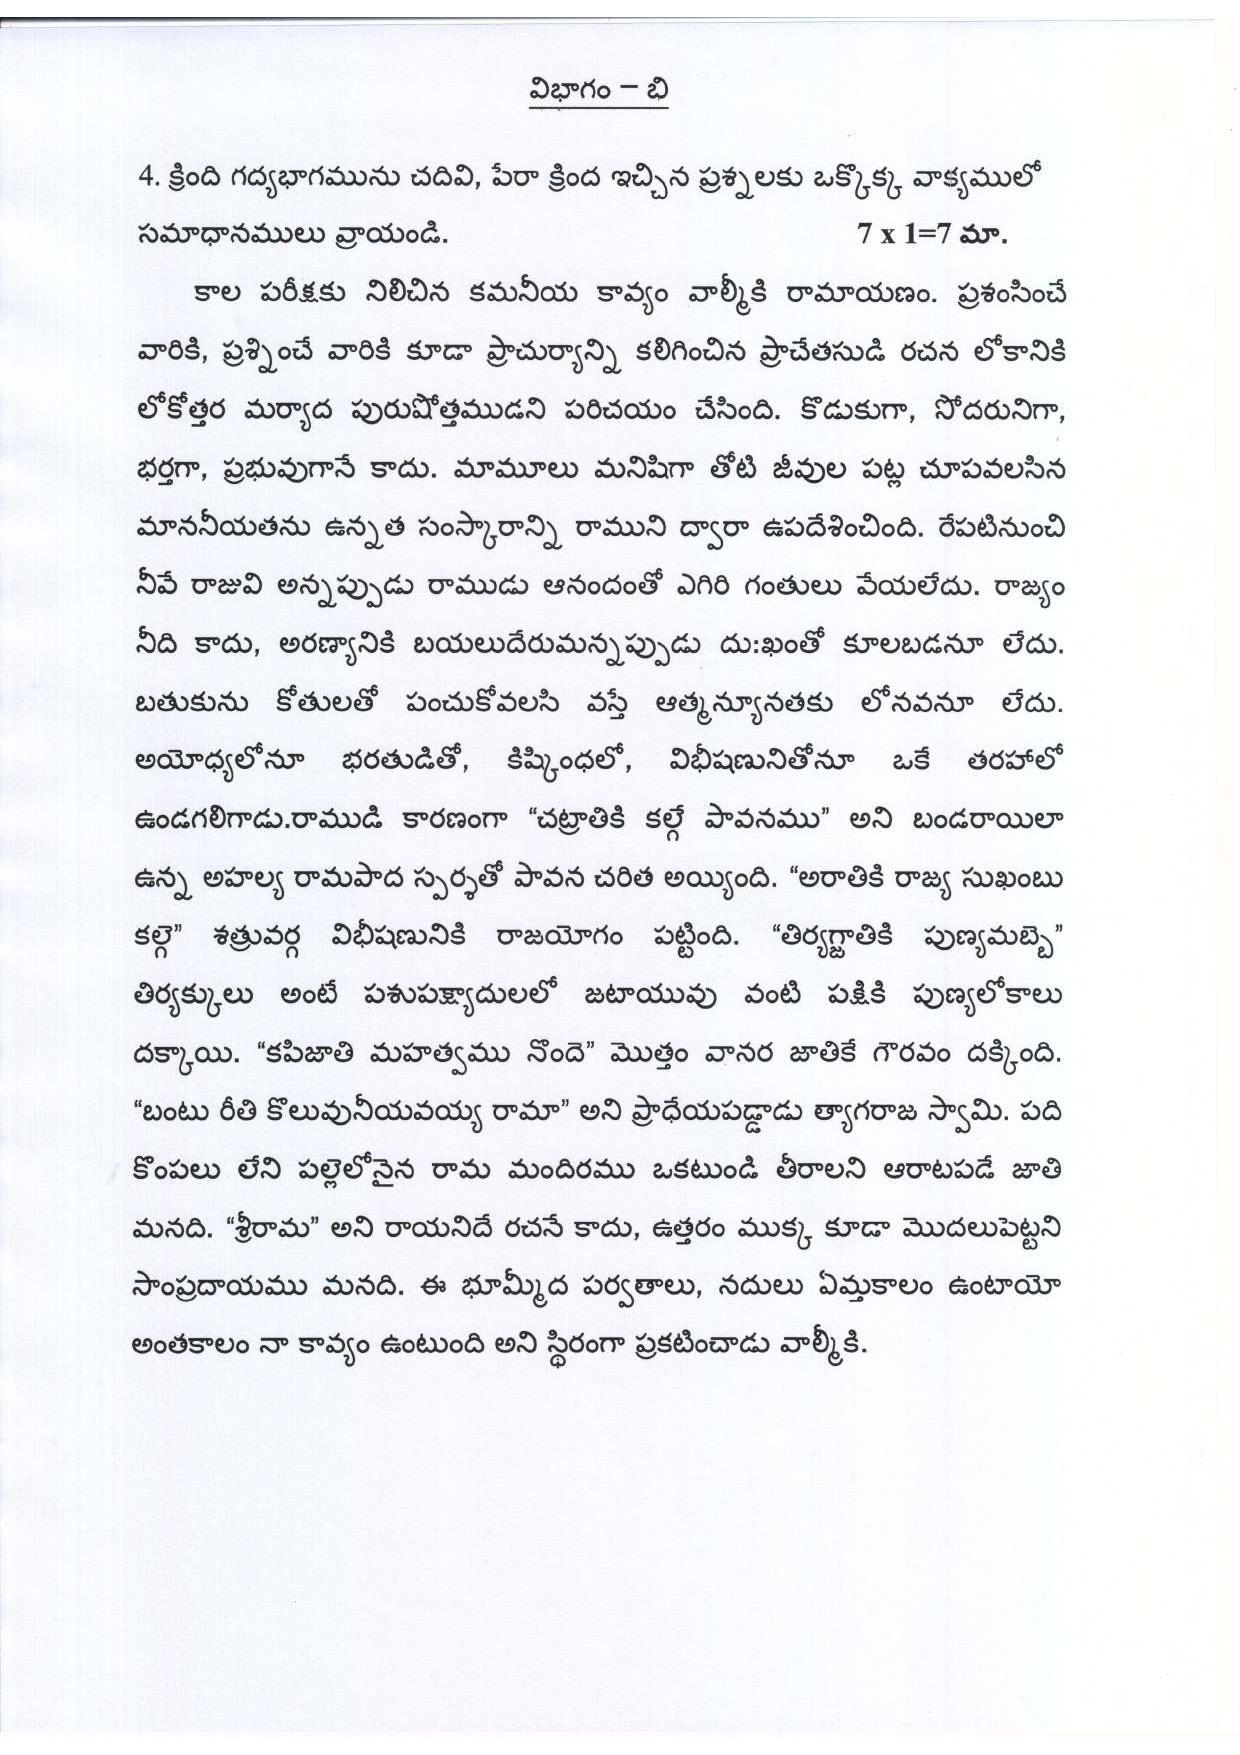 CBSE Class 12 Telugu -Sample Paper 2019-20 - Page 2